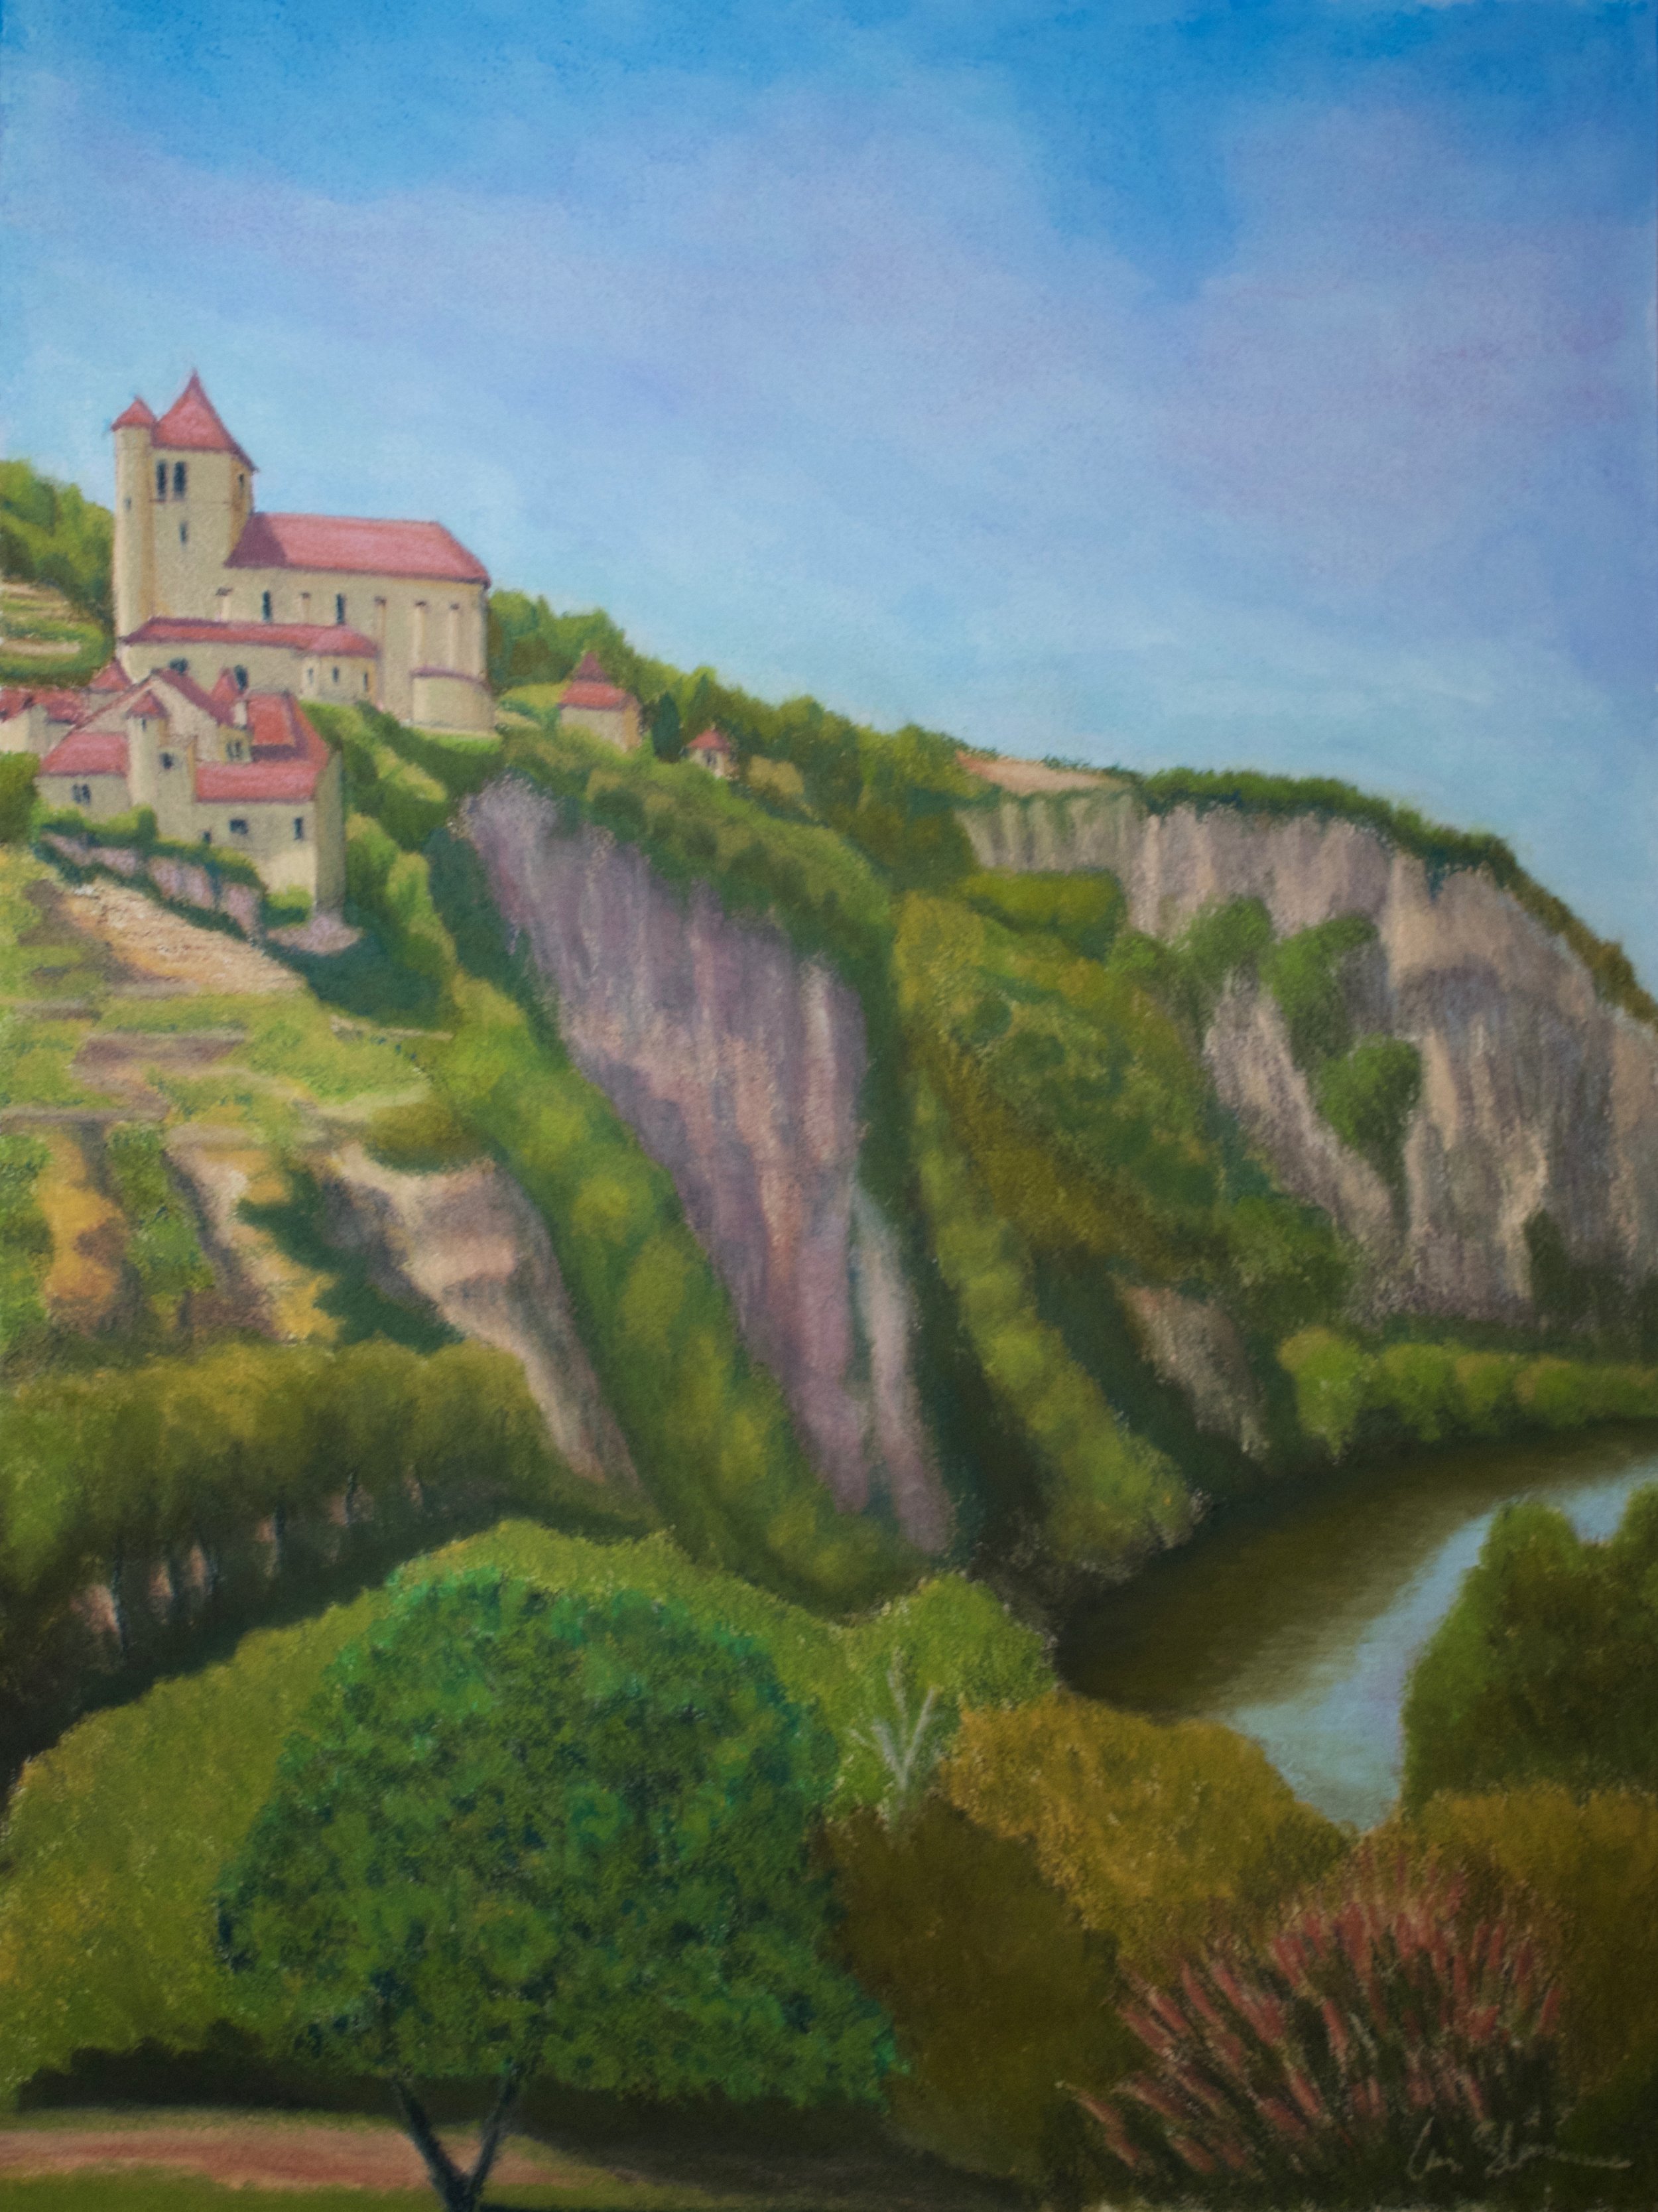  Saint Cirq, 2015  pastel on paper, 18x24 inches 